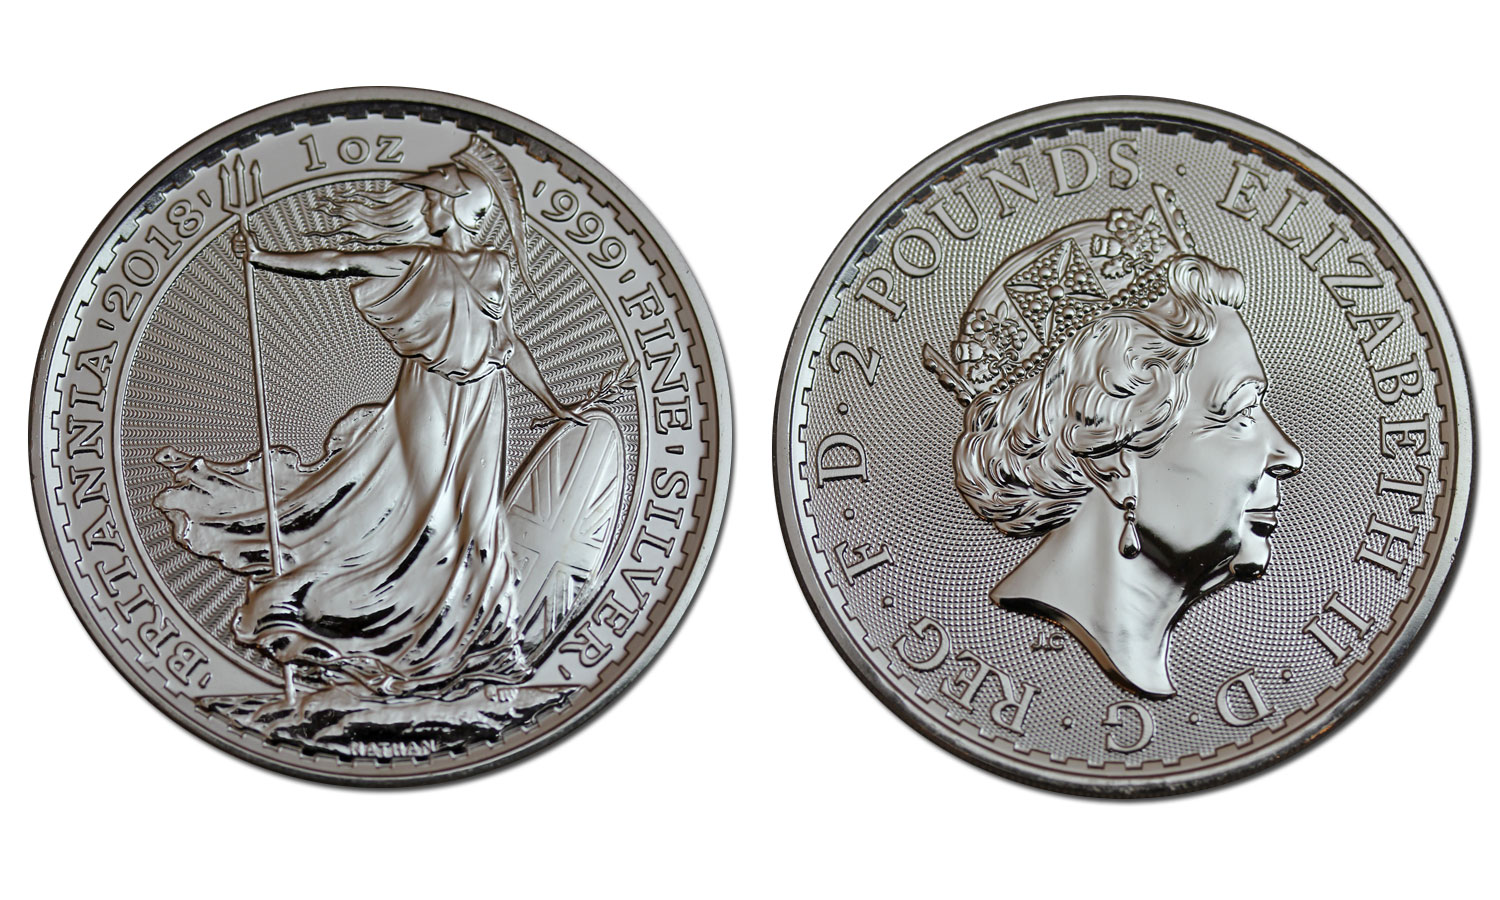 Britannia - moneta da 2 pounds (1 oncia) gr. 31,10 in ag. 999/